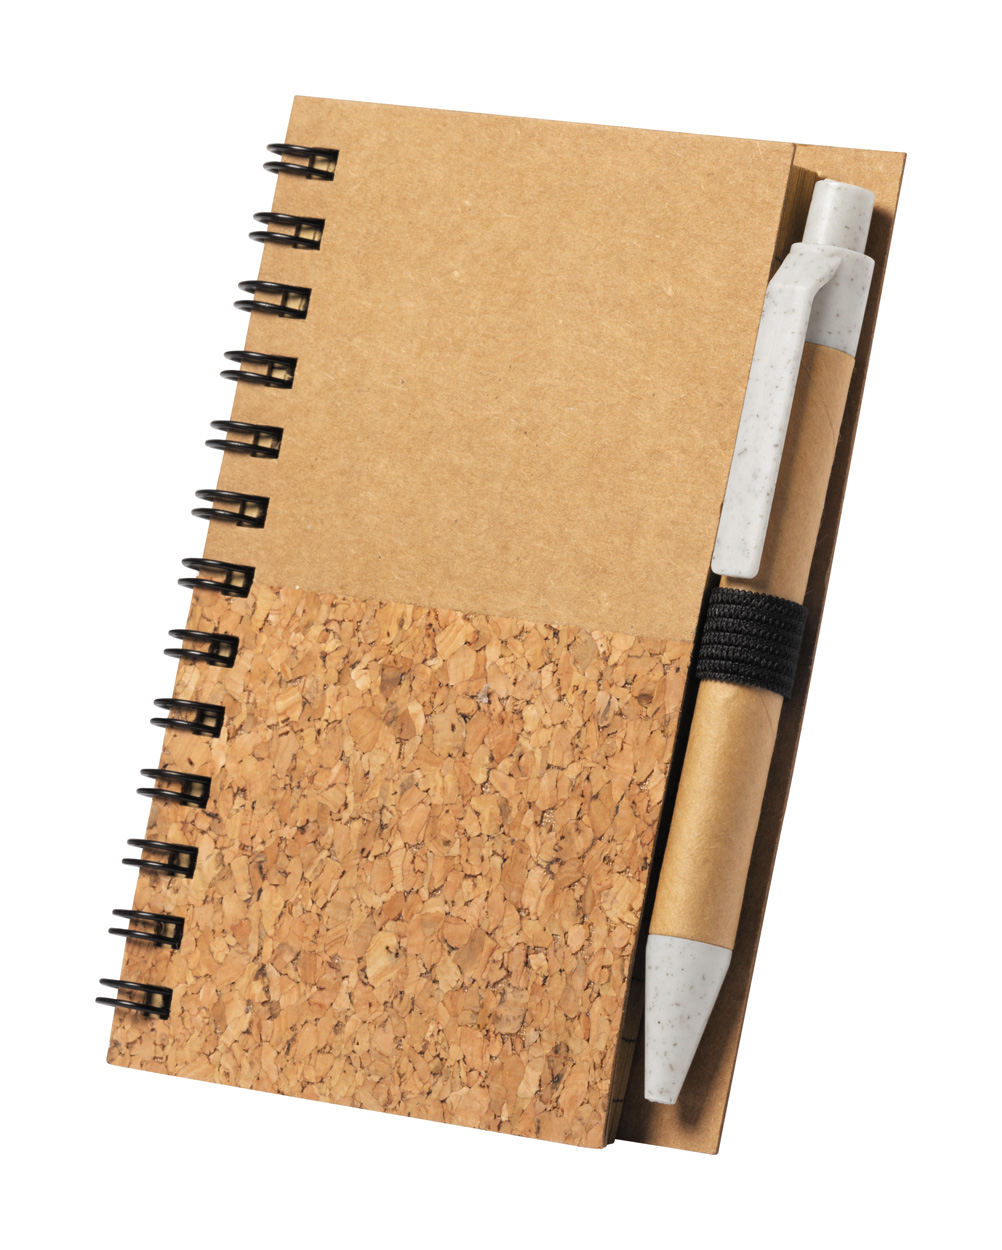 Sulax notebook